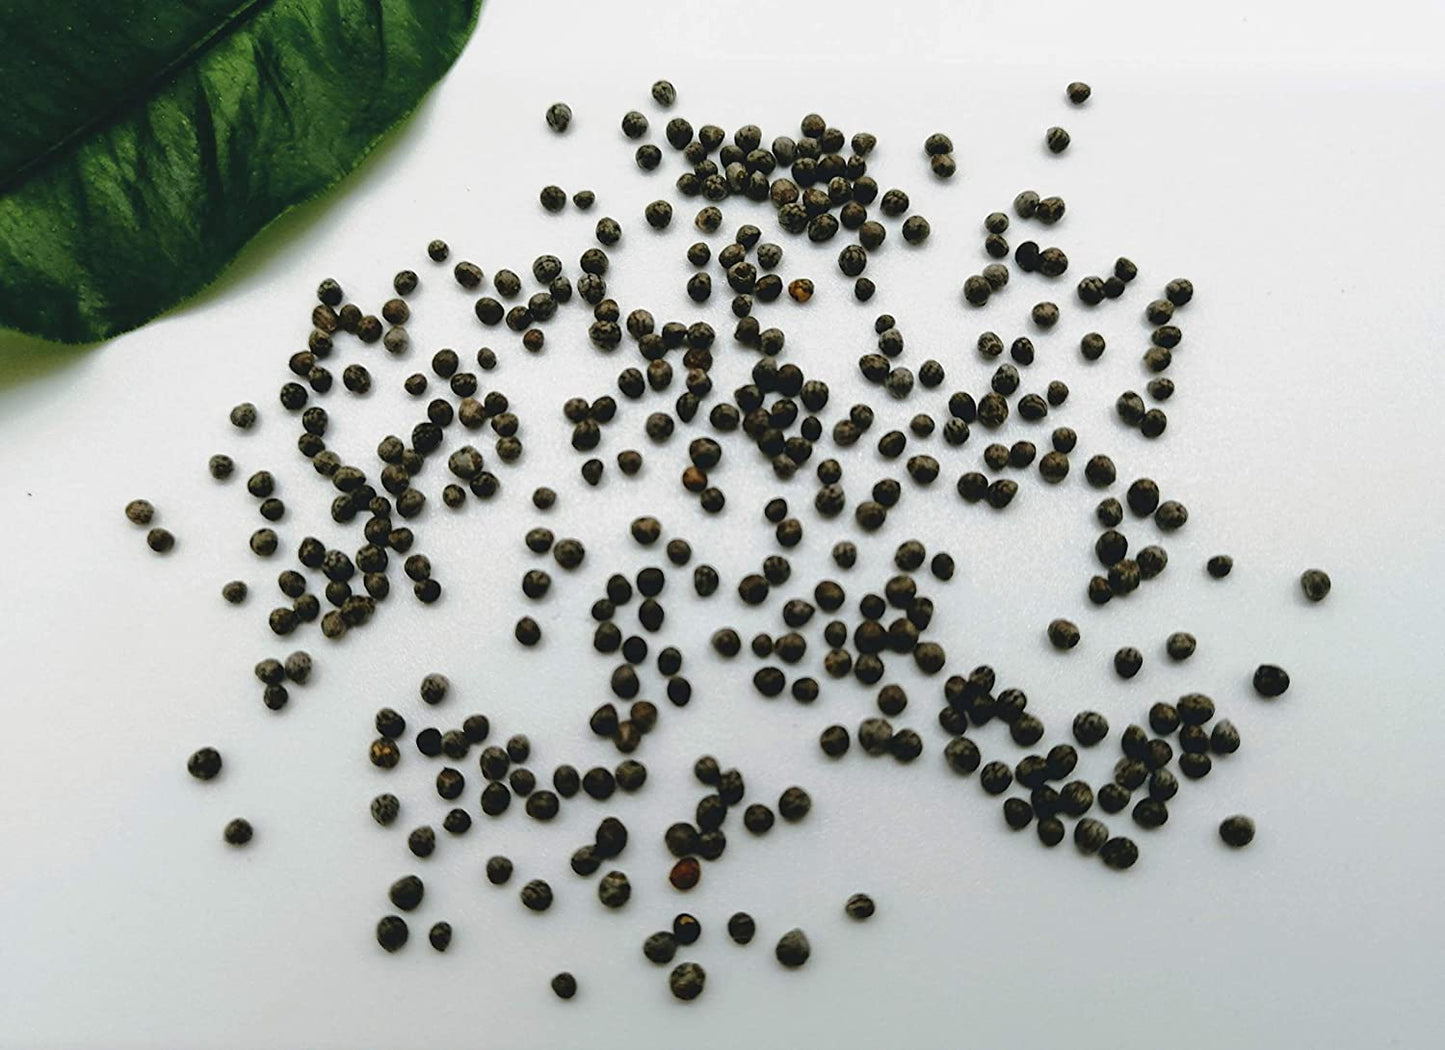 Hundredfold Green Shiso Perilla 200 Seeds - Perilla frutescens Non-GMO Asian Herb, Zisu or Japanese Basil for Sushi & Seafood